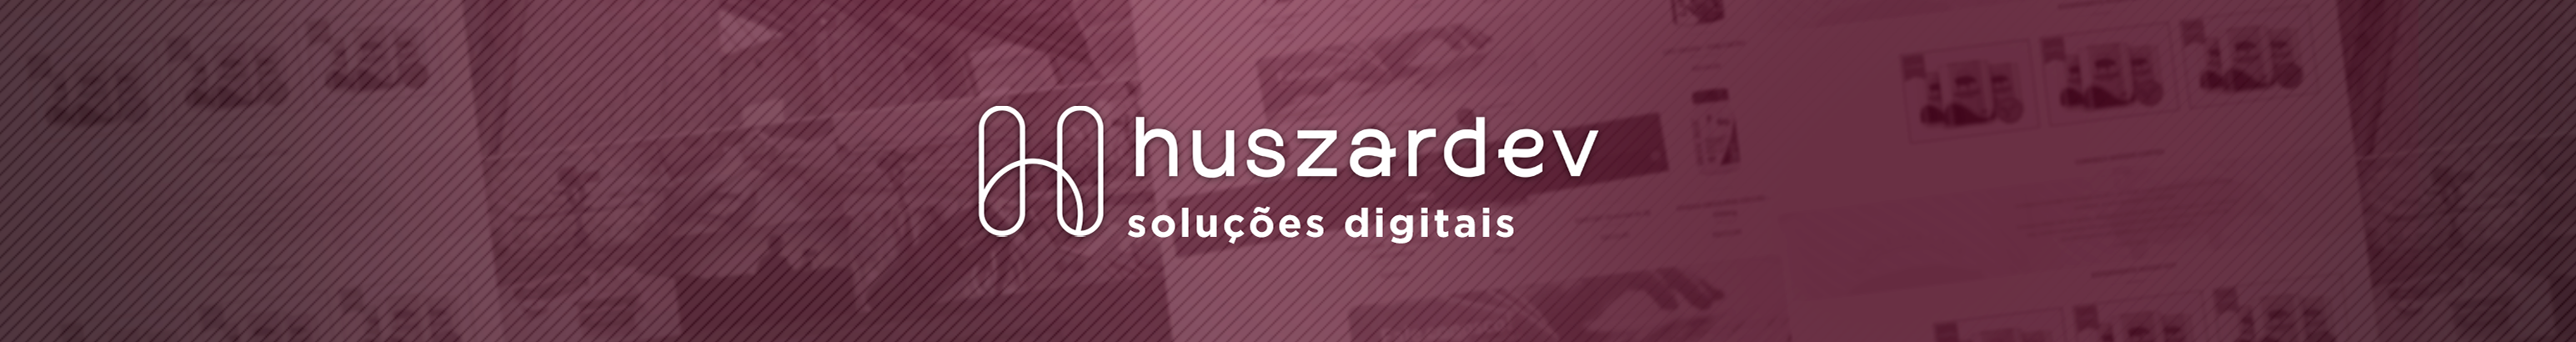 Banner de perfil de Felipe Huszar